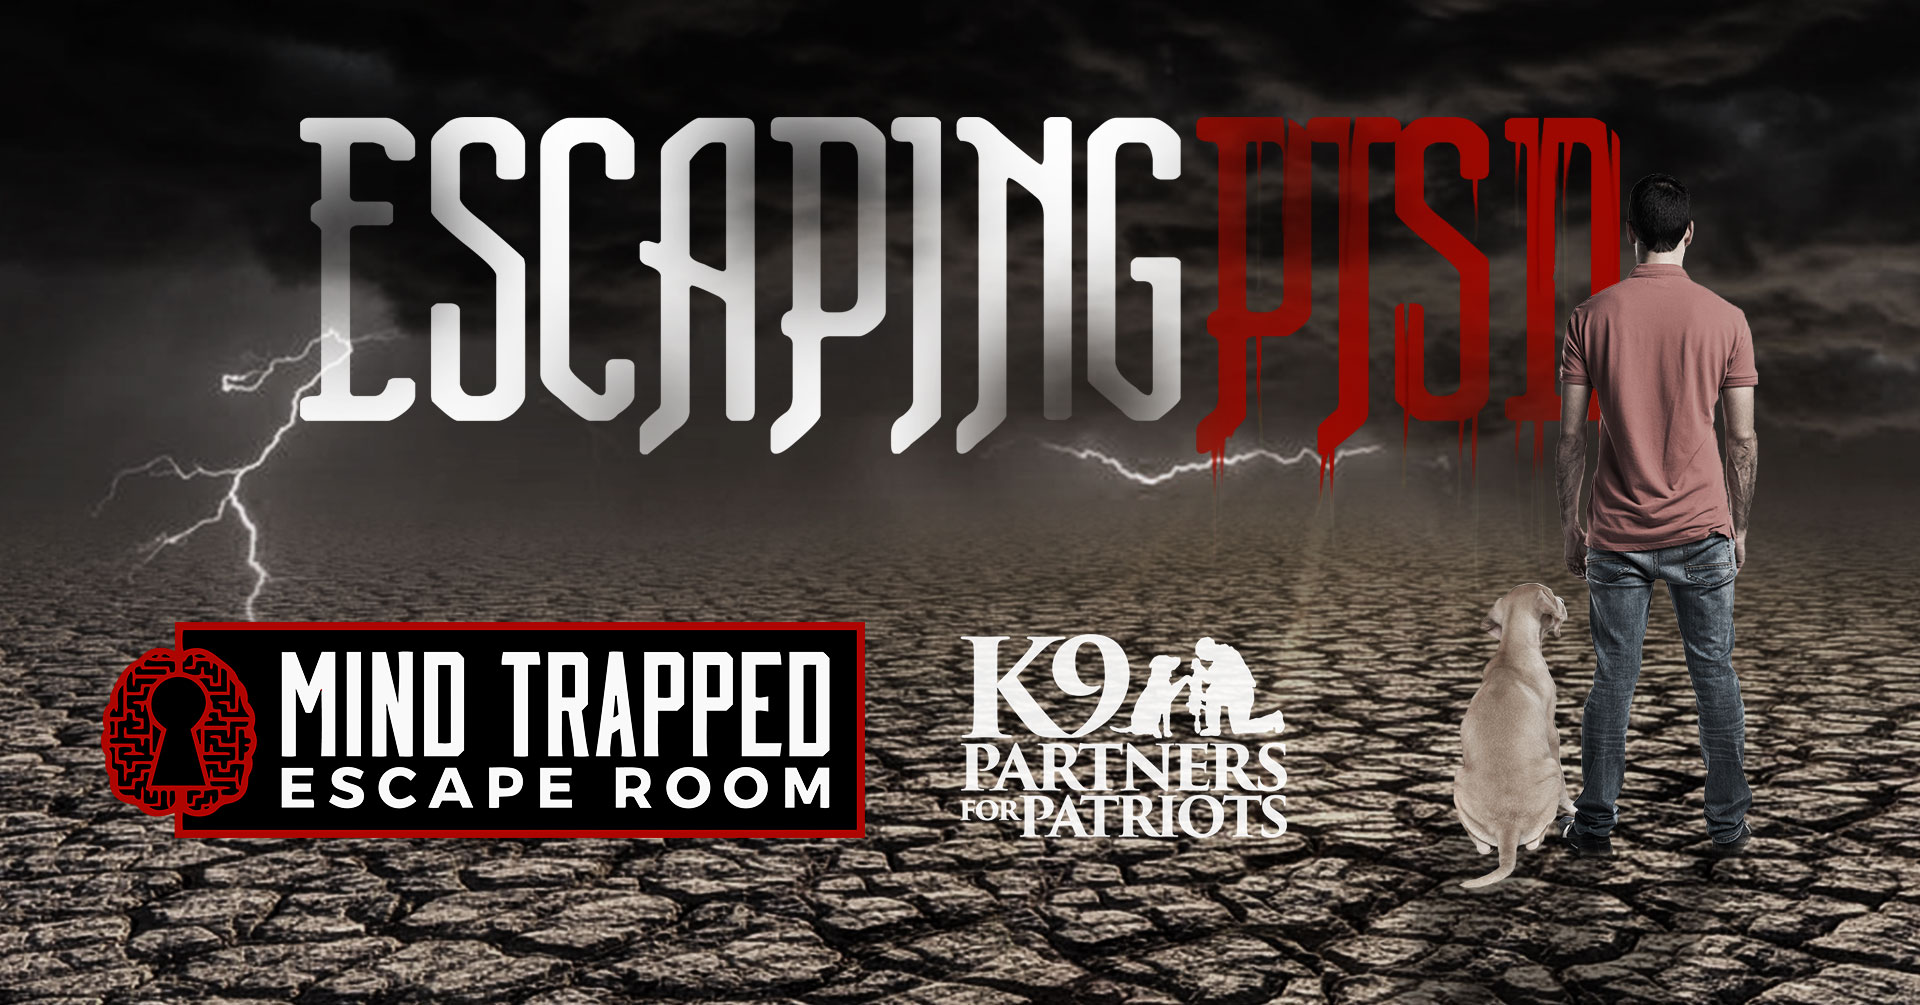 Escaping PTSD Escape Room